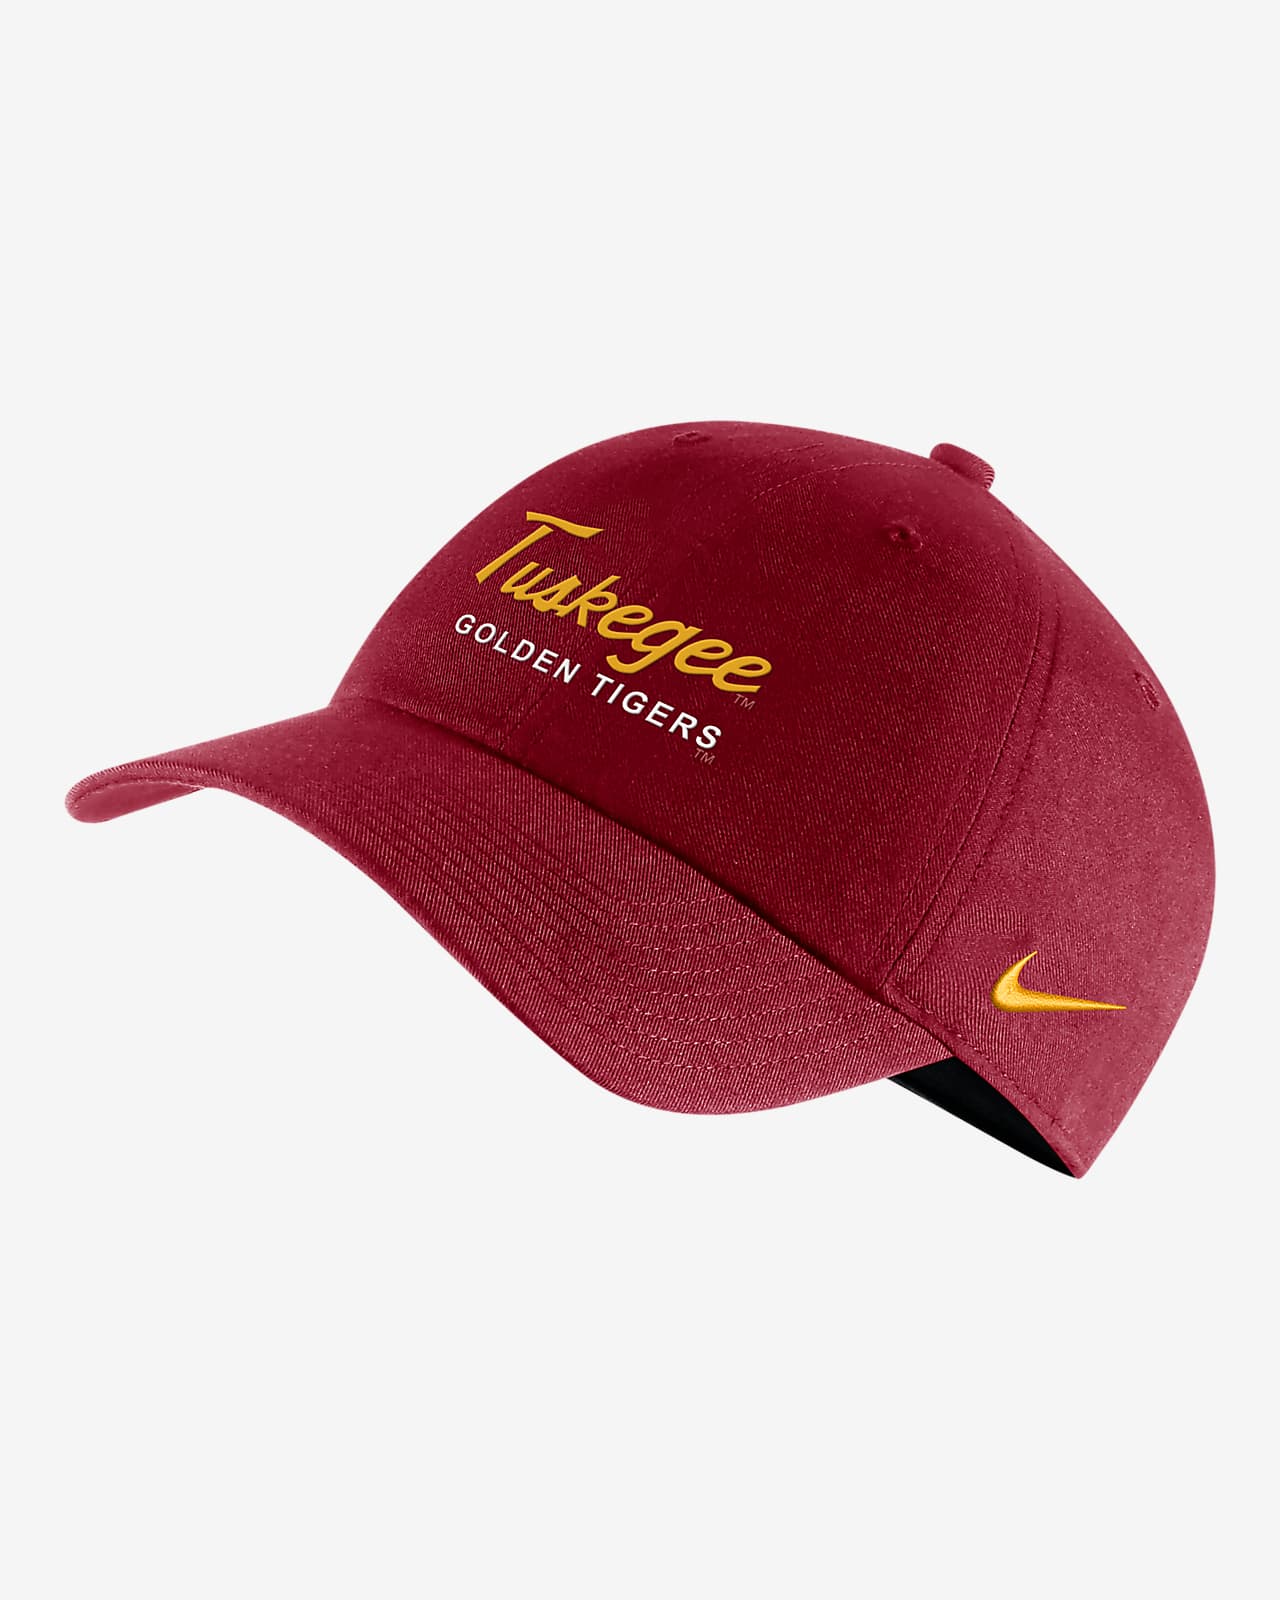 Nike College Campus 365 (Tuskegee) Adjustable Hat